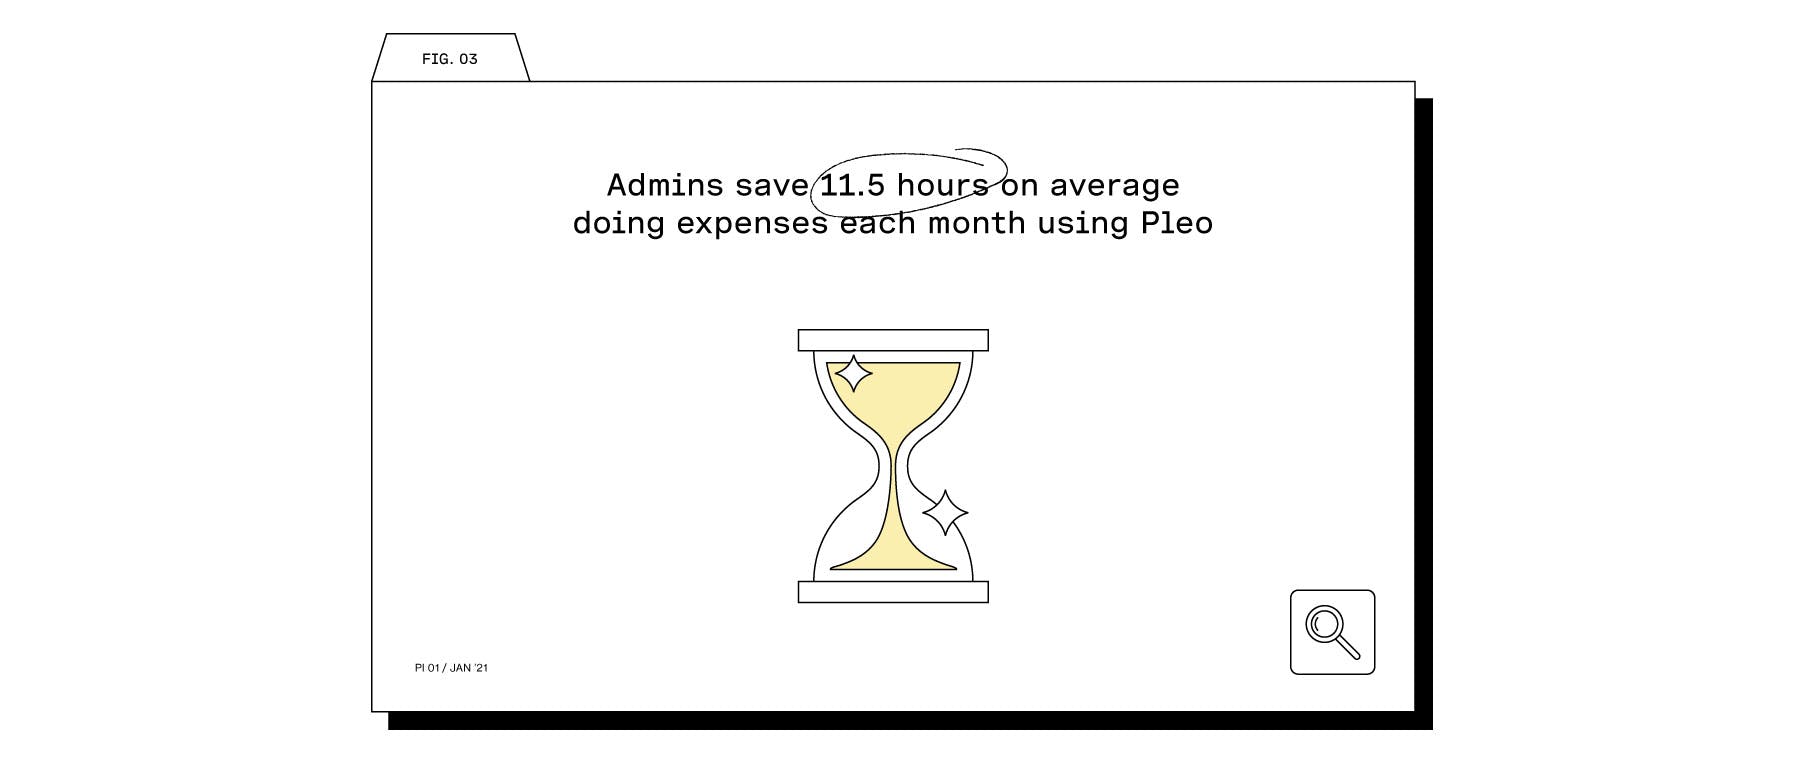 Save 11.5 hours using Pleo